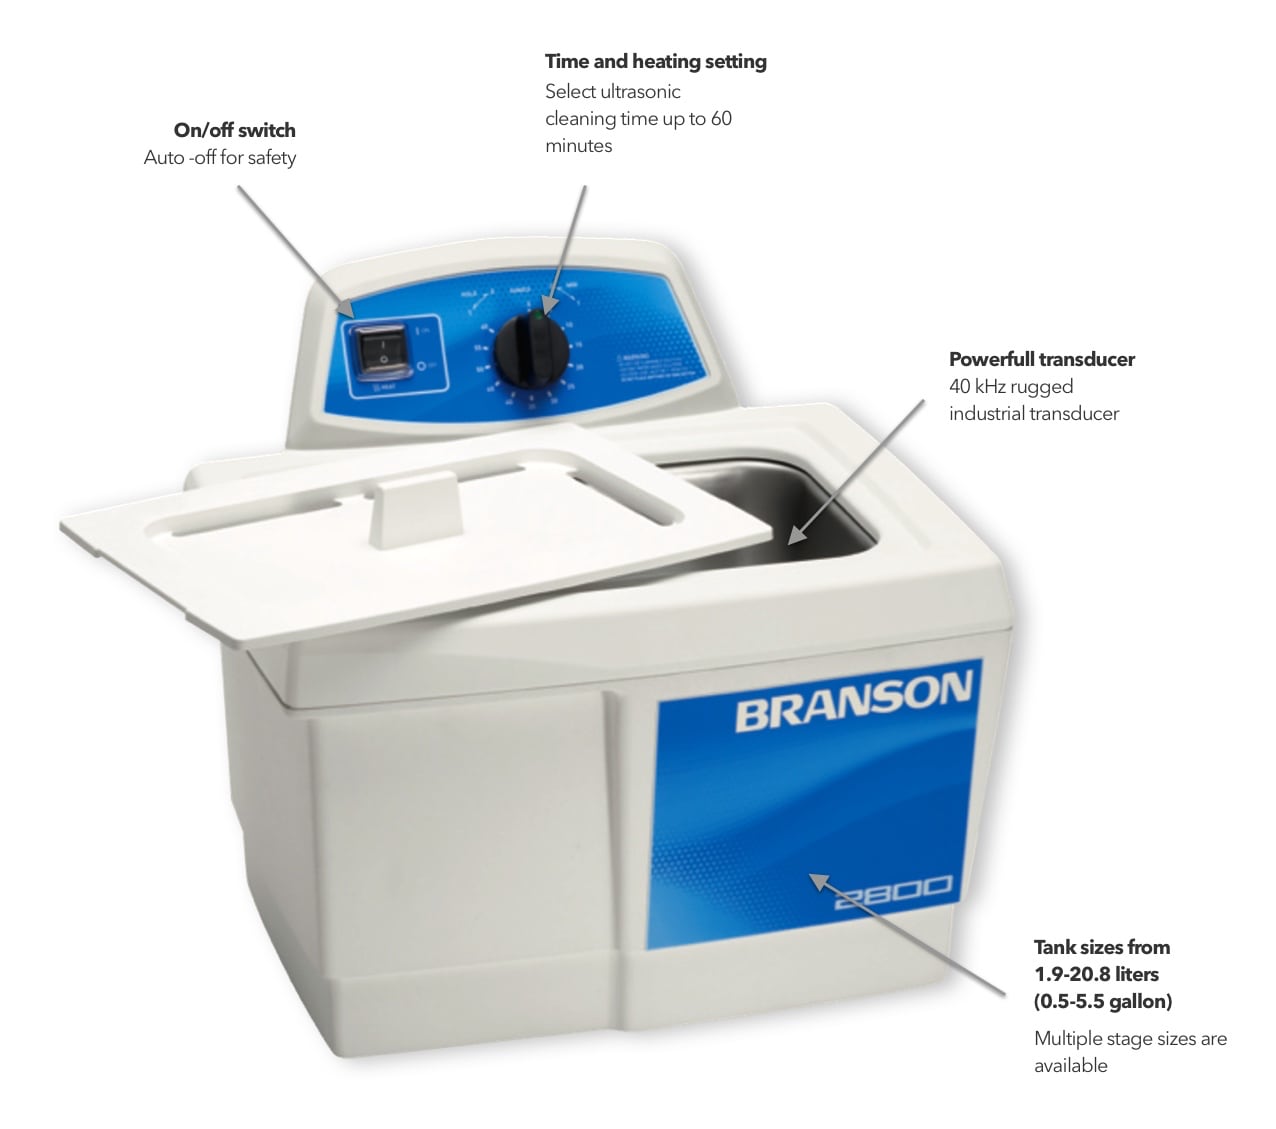 Esteves Branson ultrasonic US bath cleaner usage details